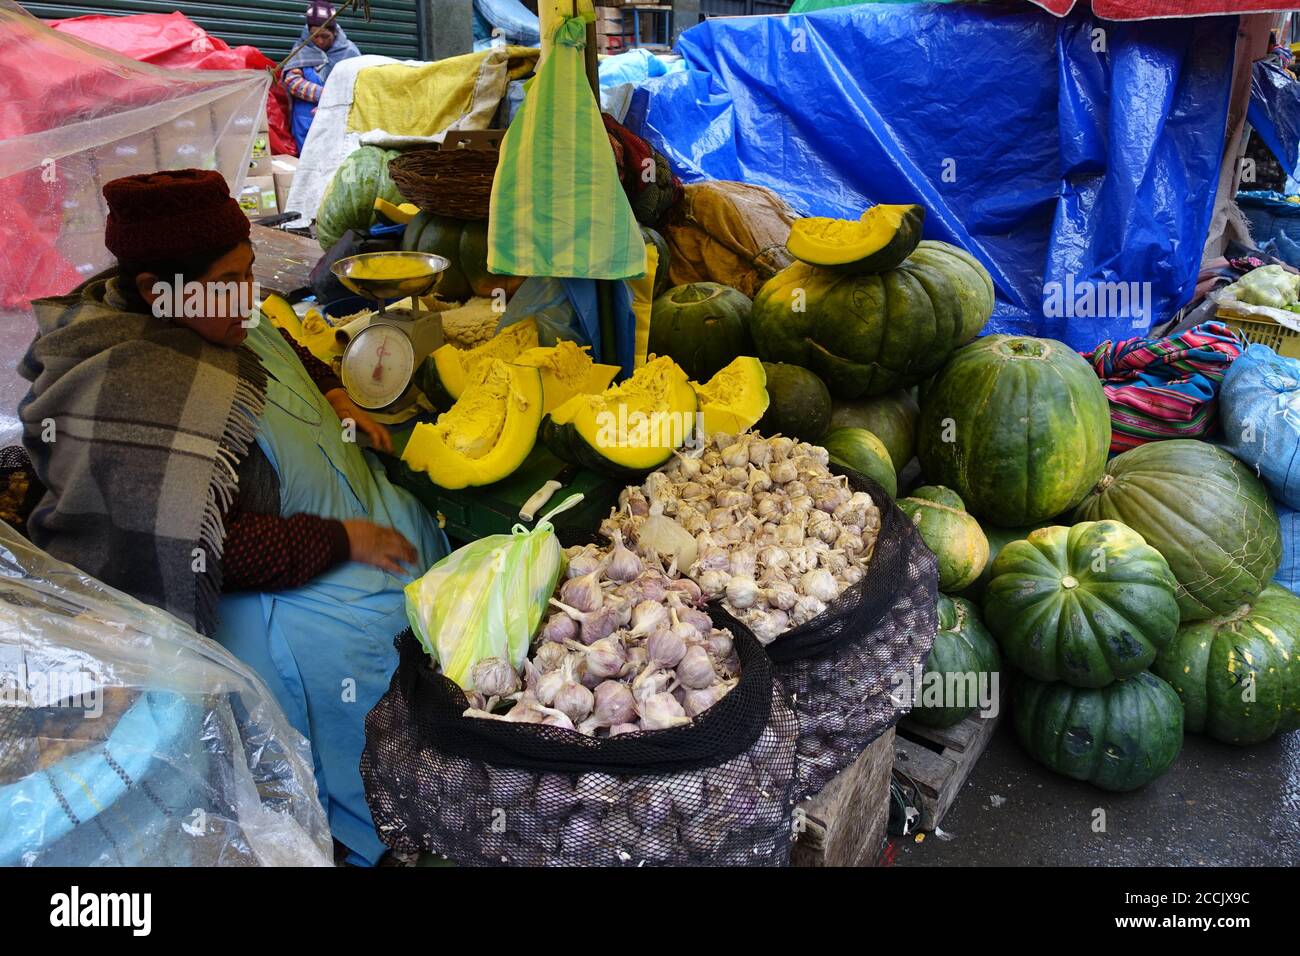 Bolivia La Paz - Rodriguez Market - Mercado Rodriguez vegetable stalls with  pumpkin Stock Photo - Alamy